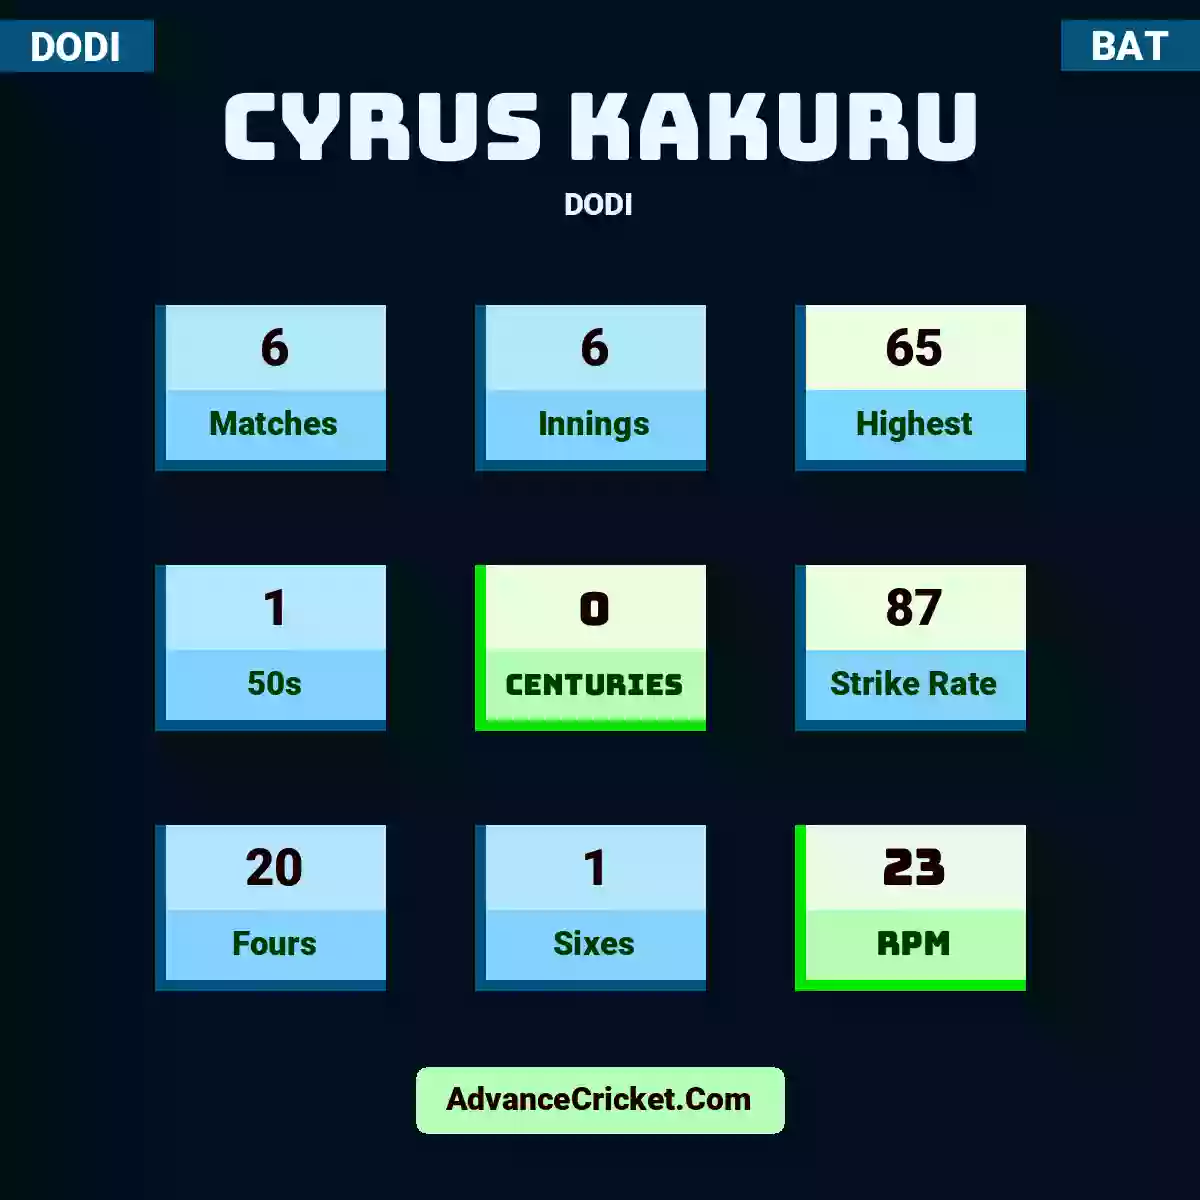 Cyrus Kakuru DODI , Cyrus Kakuru played 6 matches, scored 65 runs as highest, 1 half-centuries, and 0 centuries, with a strike rate of 87. C.Kakuru hit 20 fours and 1 sixes, with an RPM of 23.